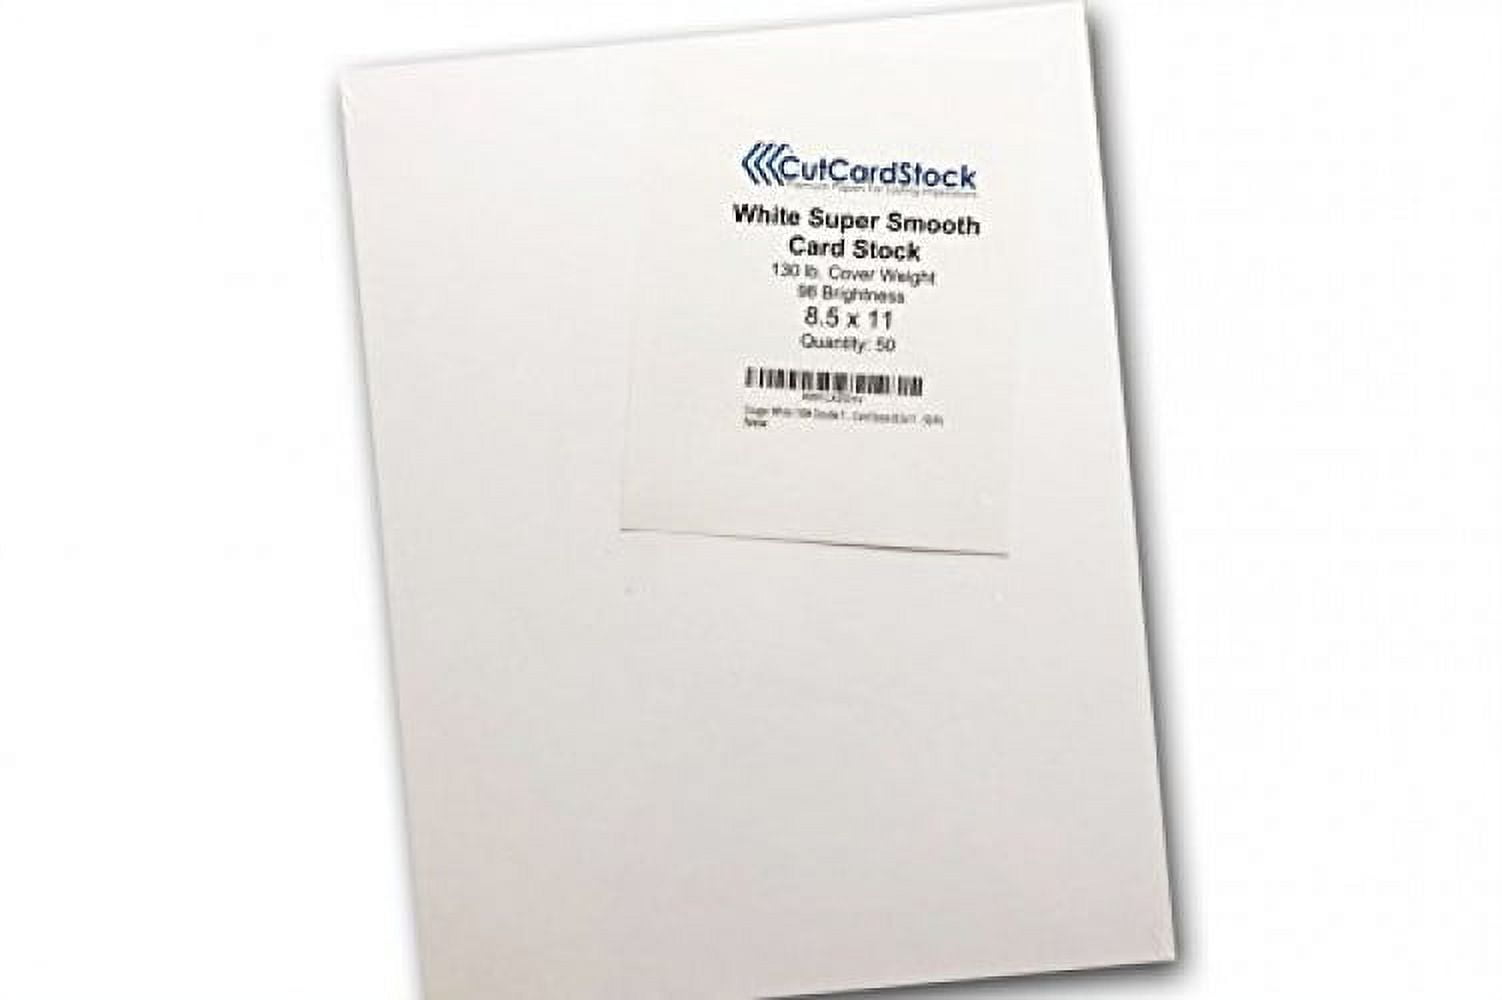 COUGAR Natural 80lb. cardstock 8.5 x 11- 50 sheets